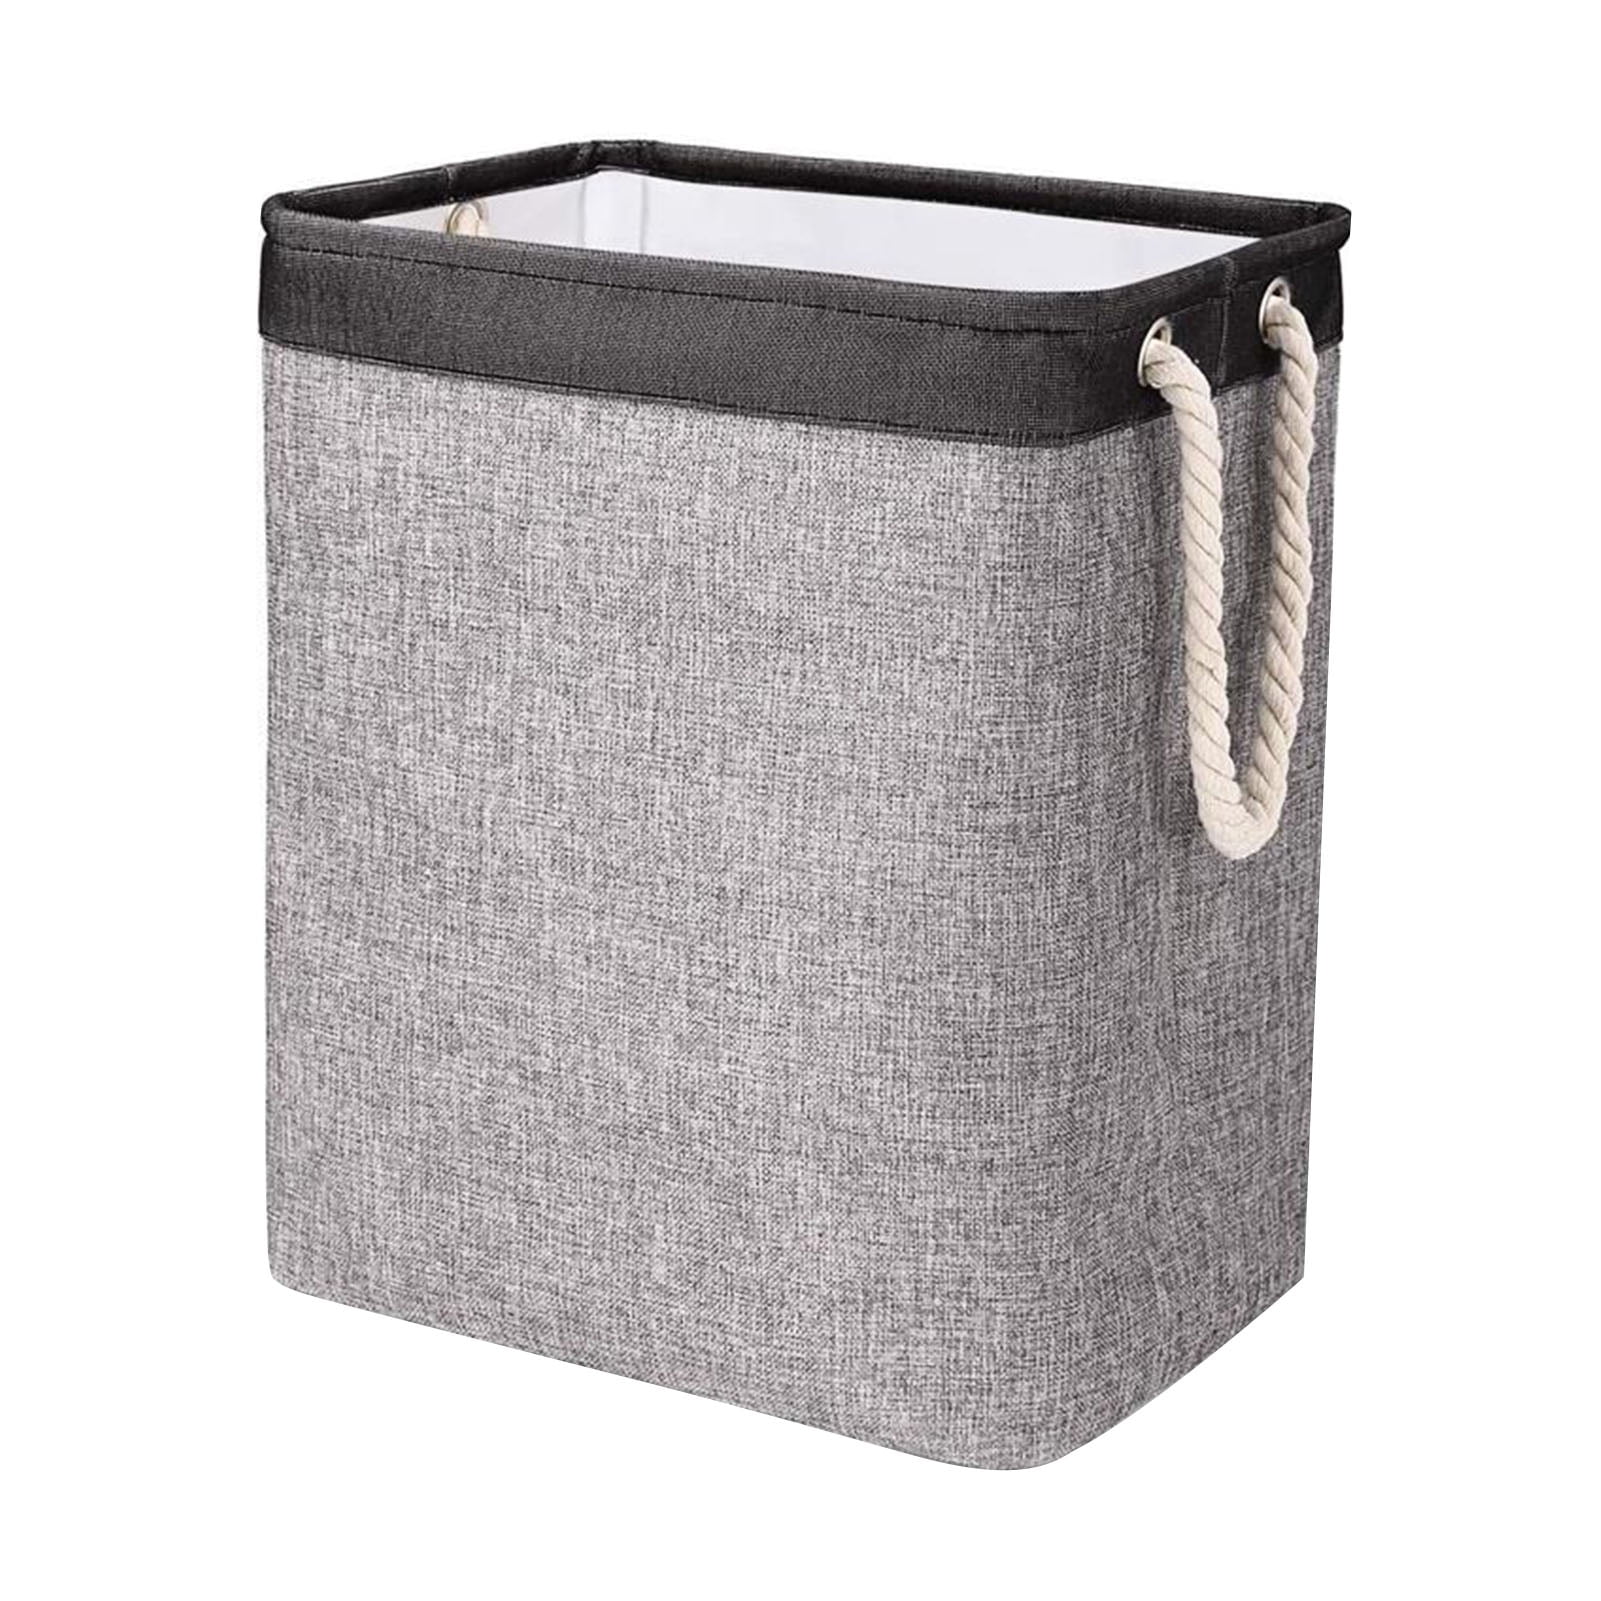 Large 70 cm Laundry Foldable Mesh Washing Basket Bag Pop Up Hamper 